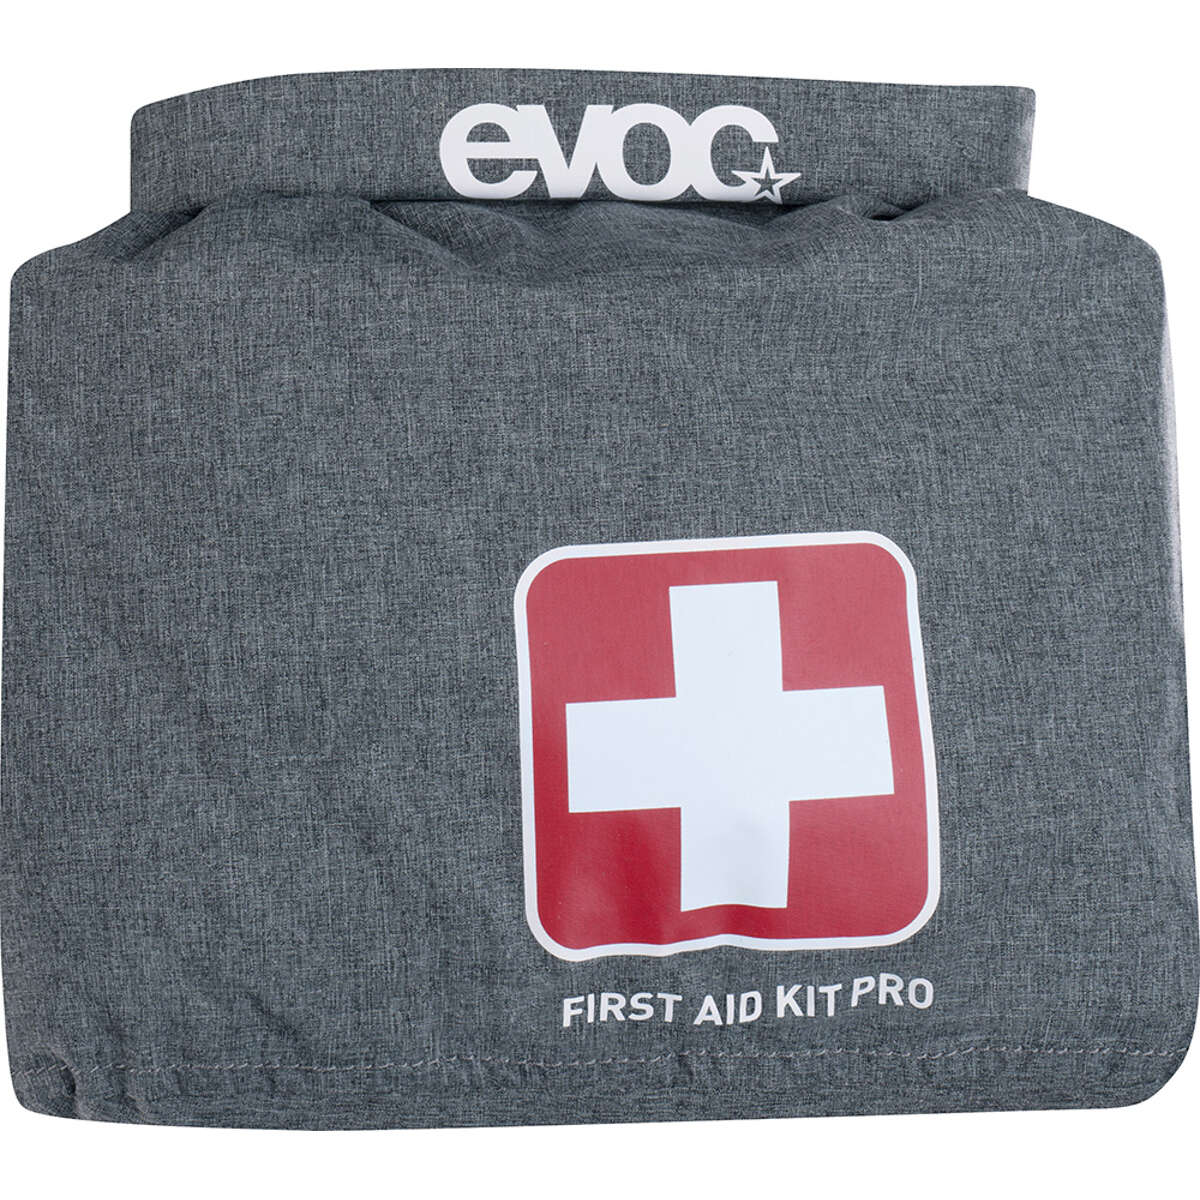 Evoc First Aid Kit Pro First Aid Kit Black/Heather